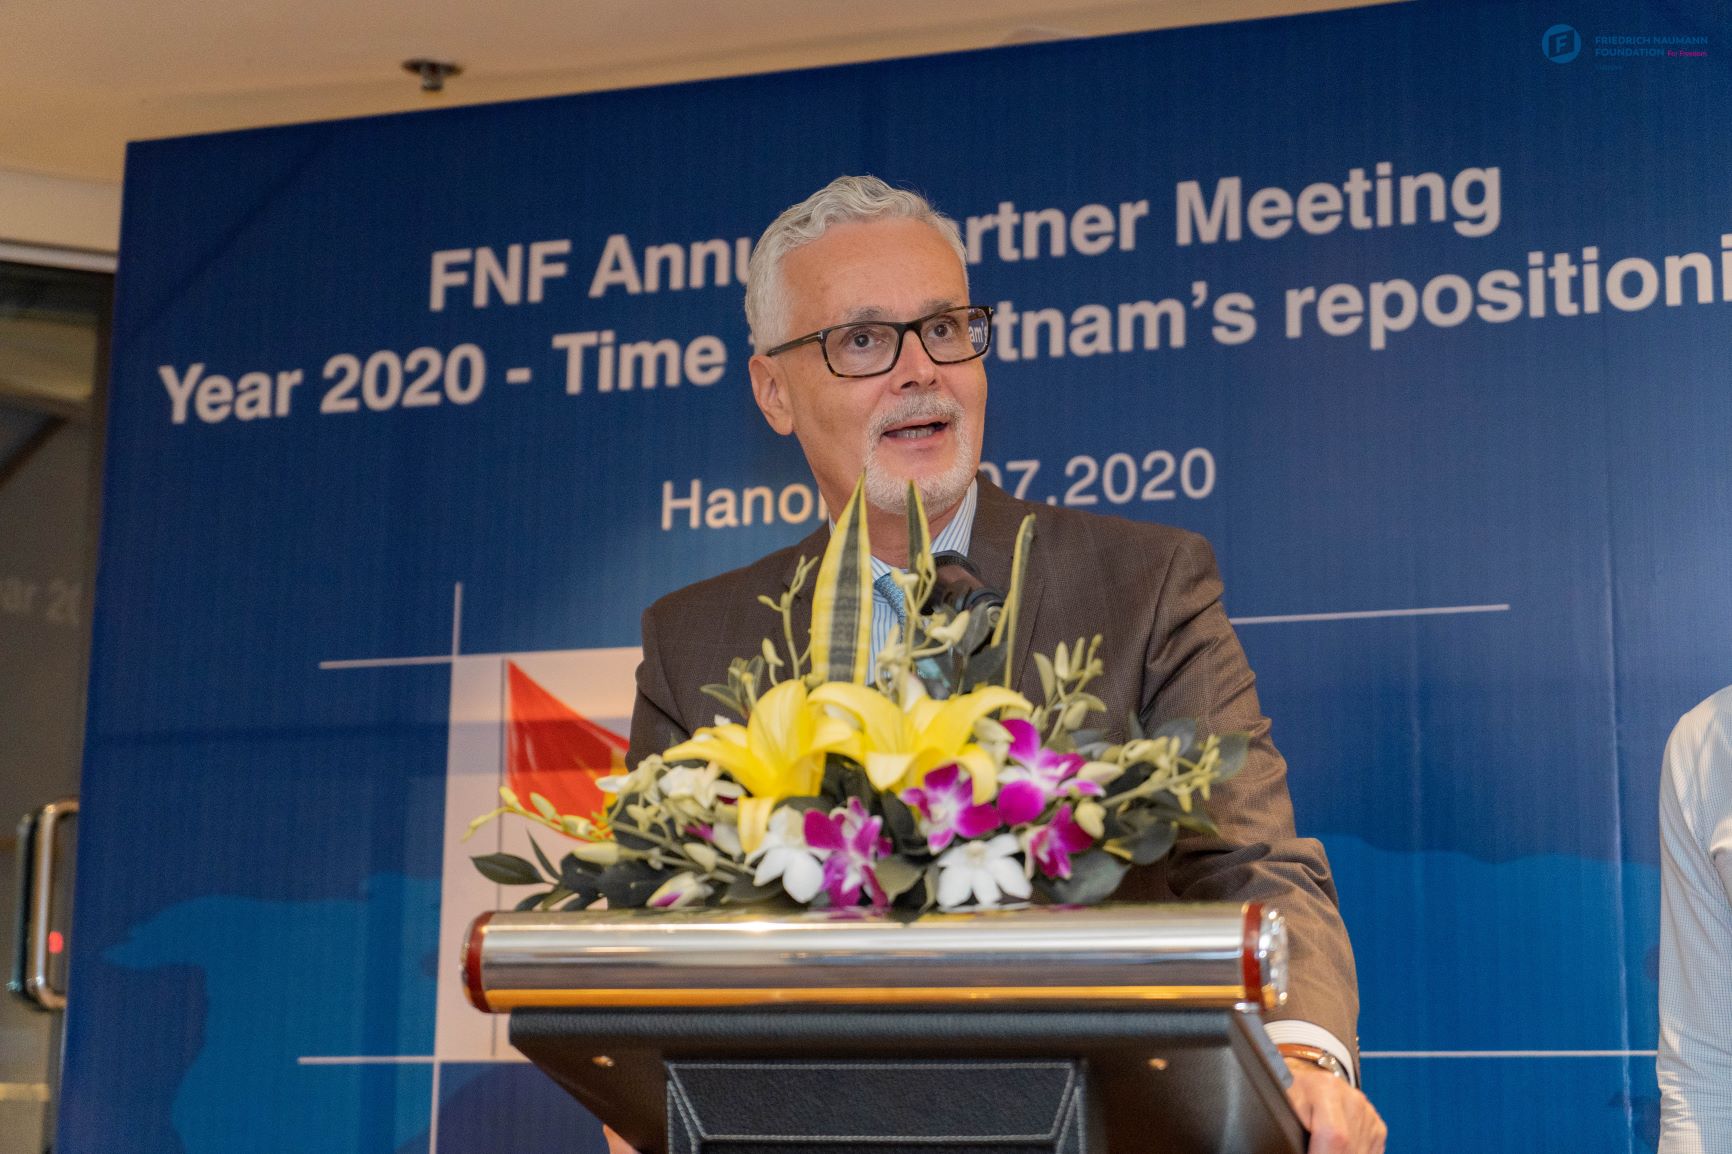 FNF Annual Partner Meeting 2020